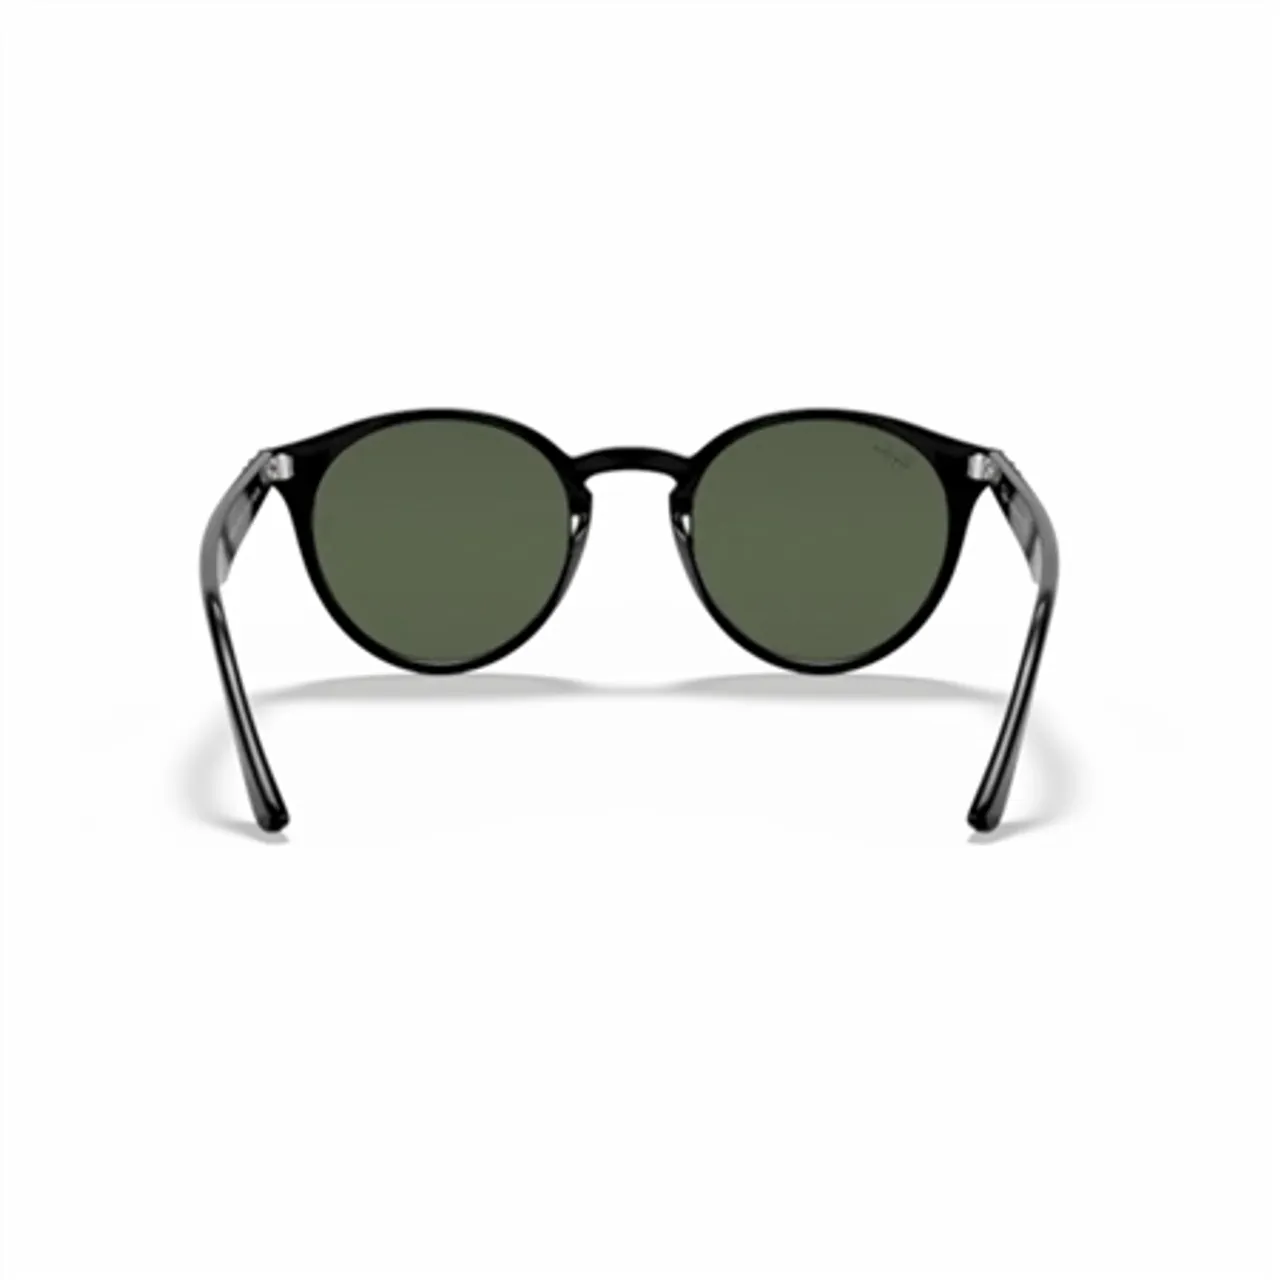 Ray-Ban RB2180 Sunglasses - Polished Black & Dark Green